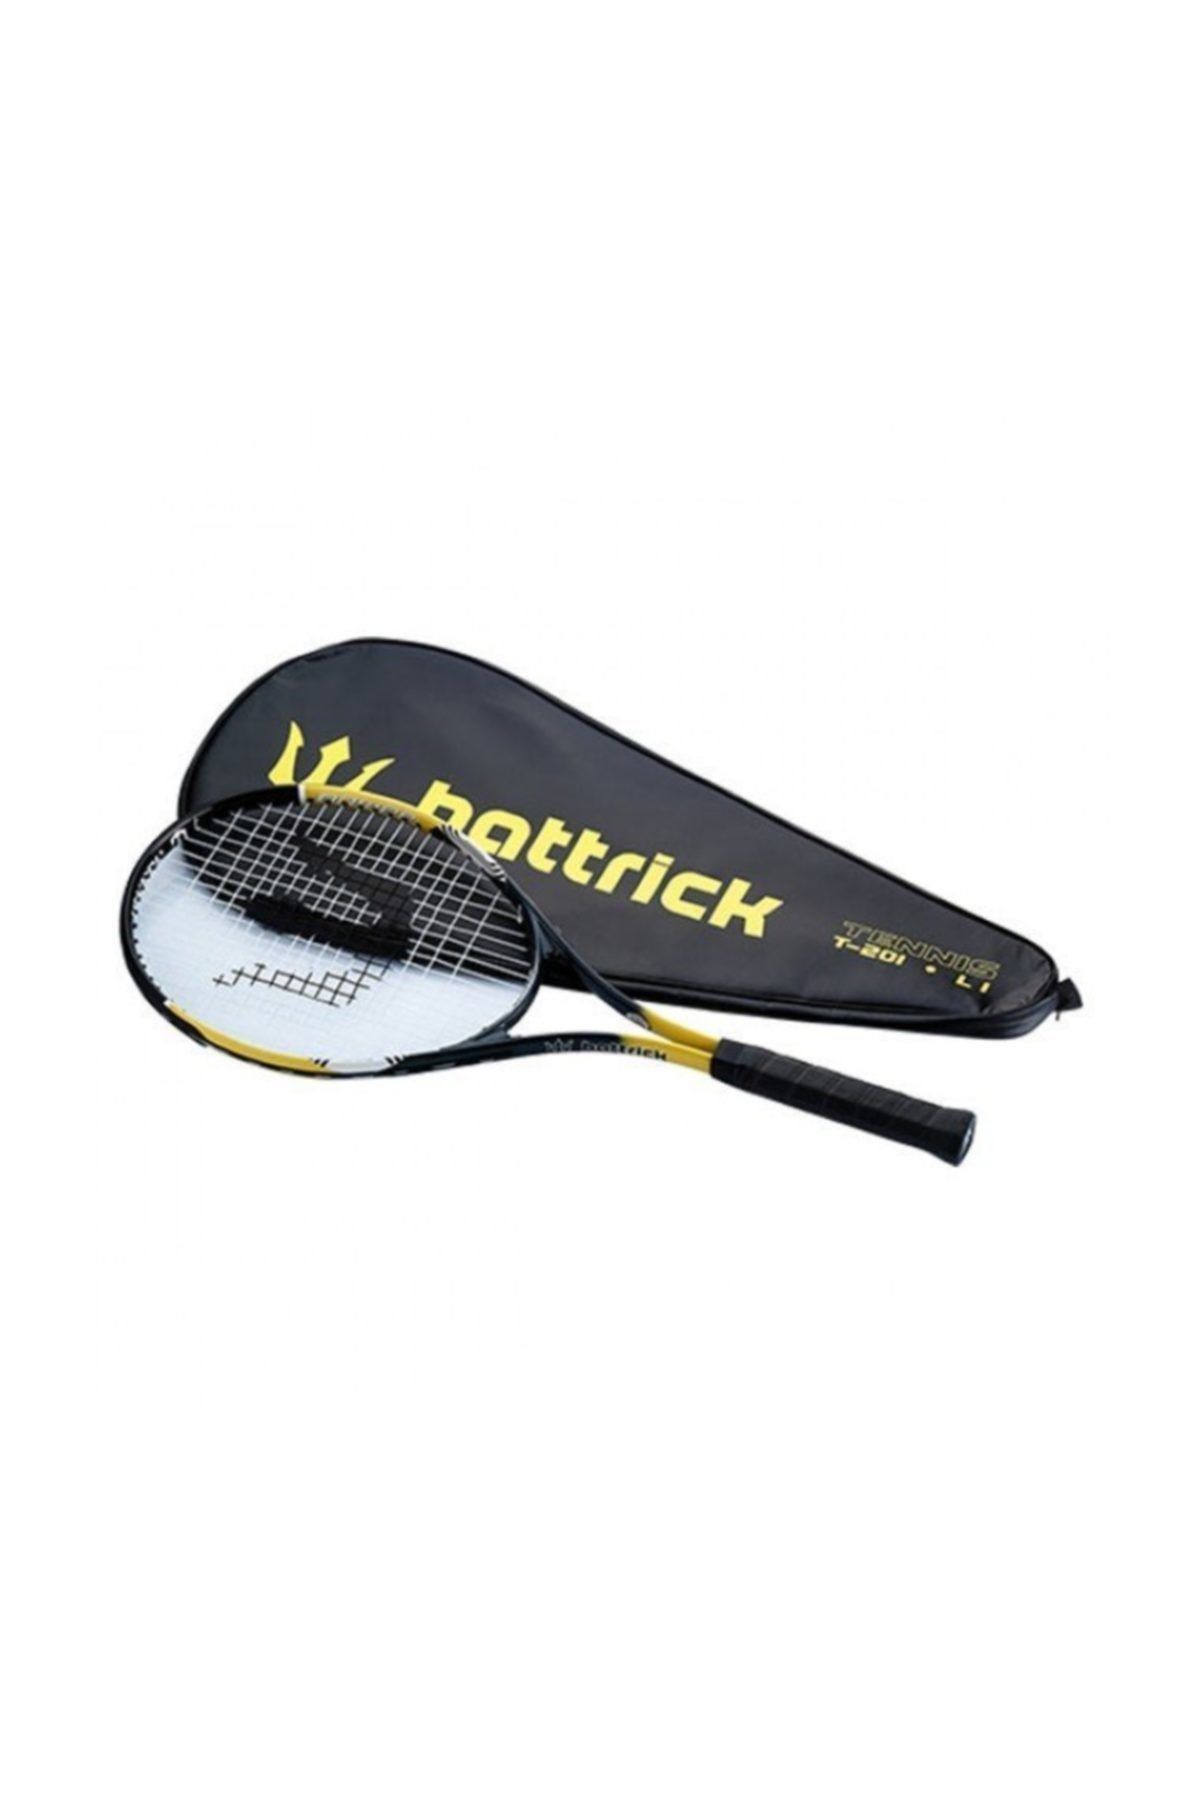 Hattrick T-201 L2 Tenis Raketi Grisarı